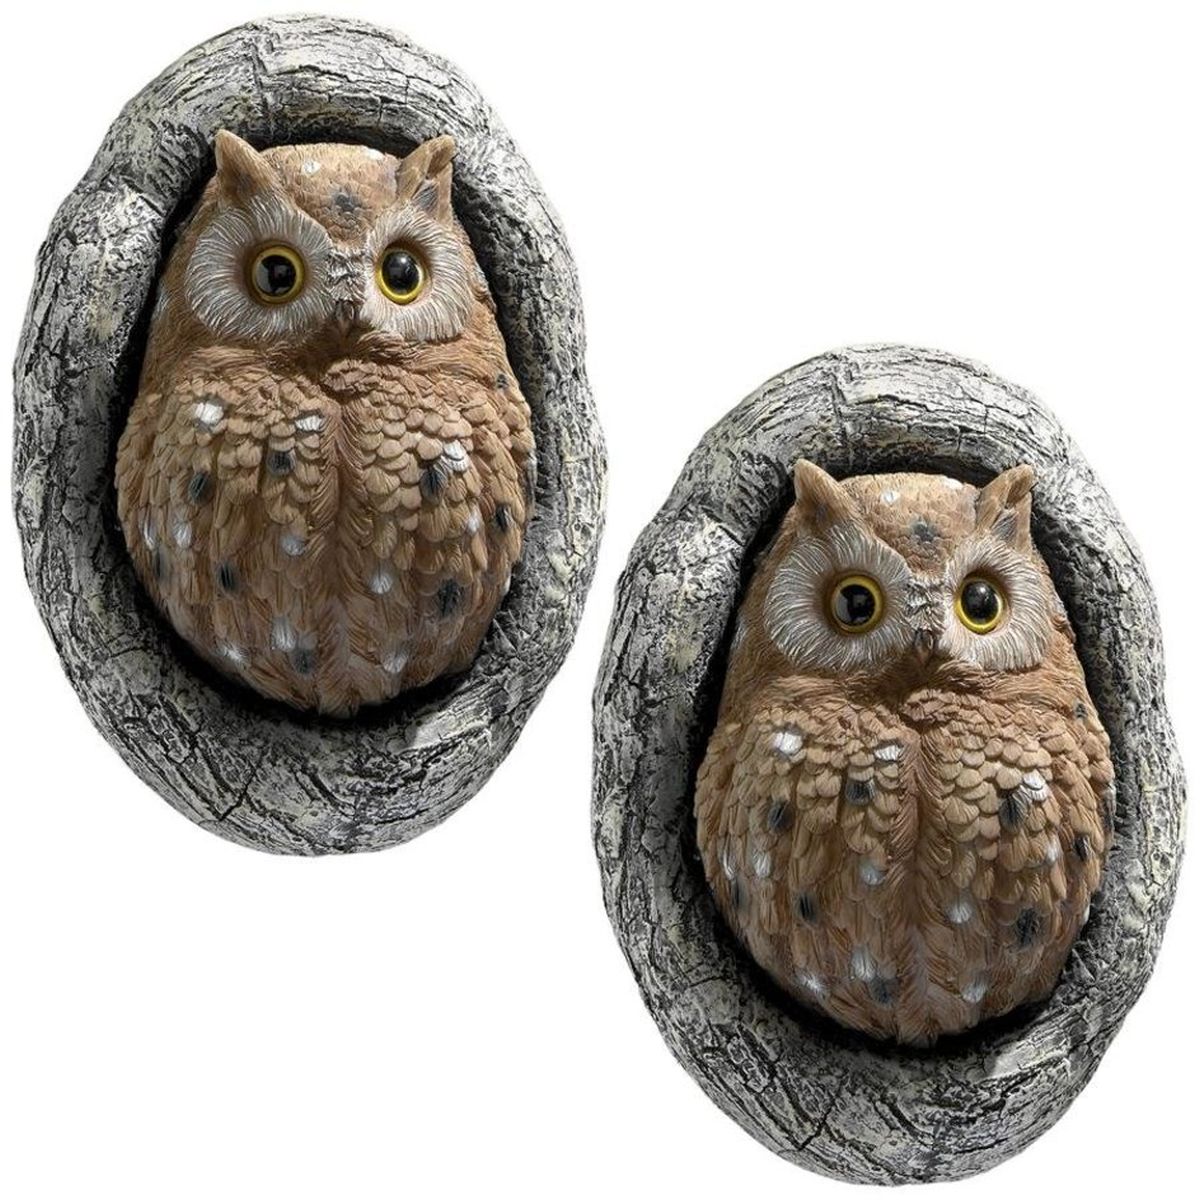 Octavius Knothole Owl Tree Sculpture Set of 2